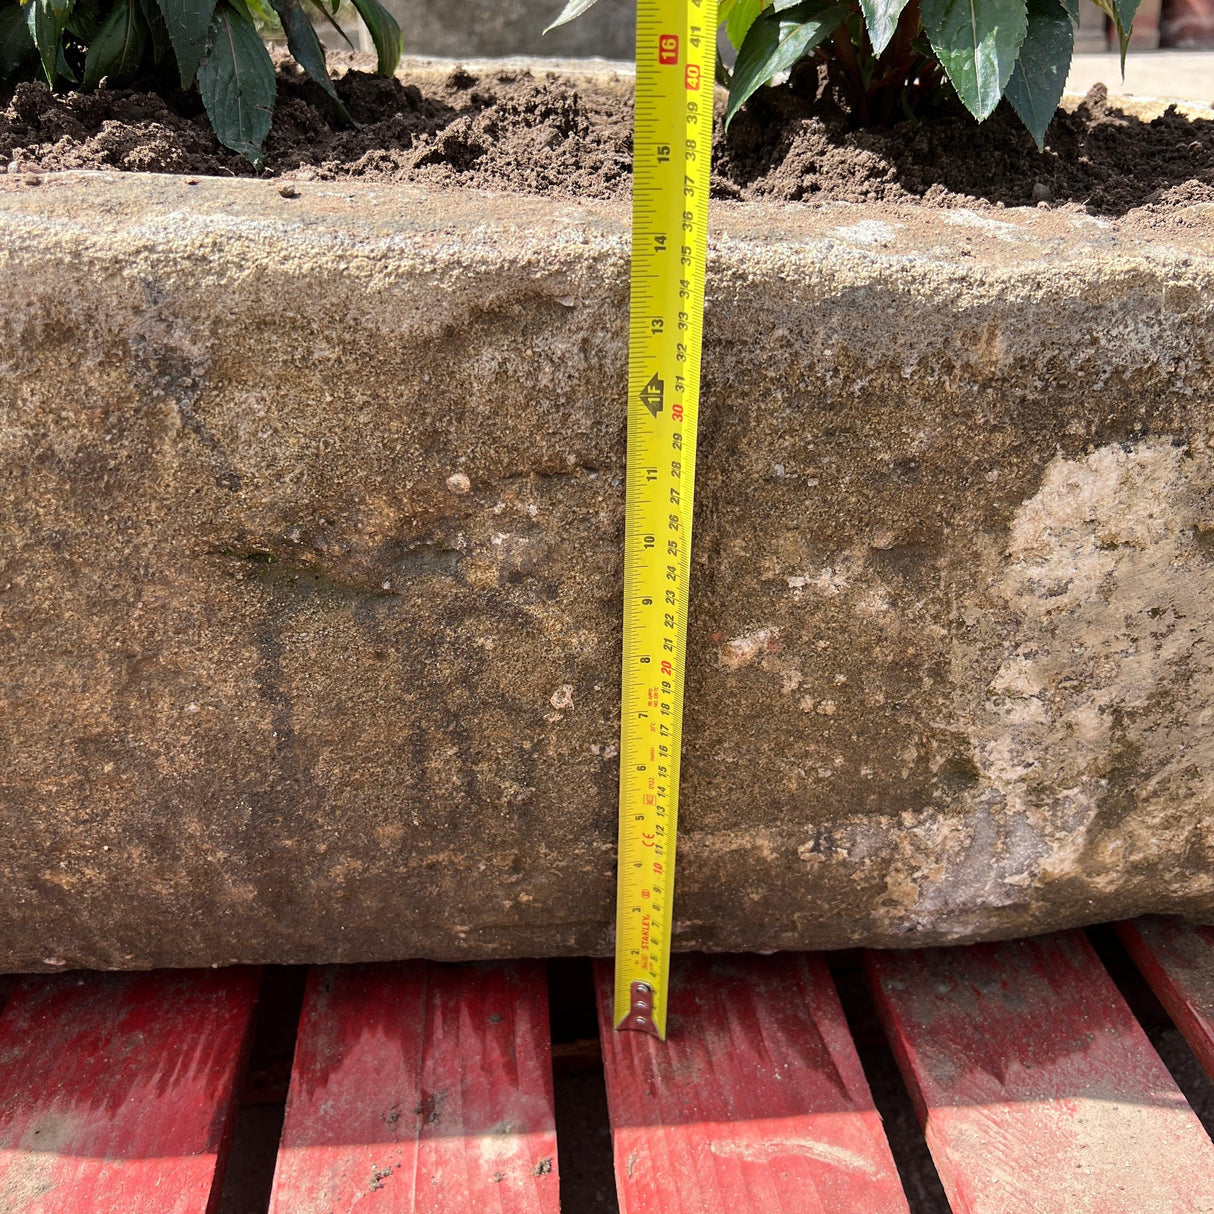 Reclaimed Stone Trough / Planter - No. 5 - Reclaimed Brick Company